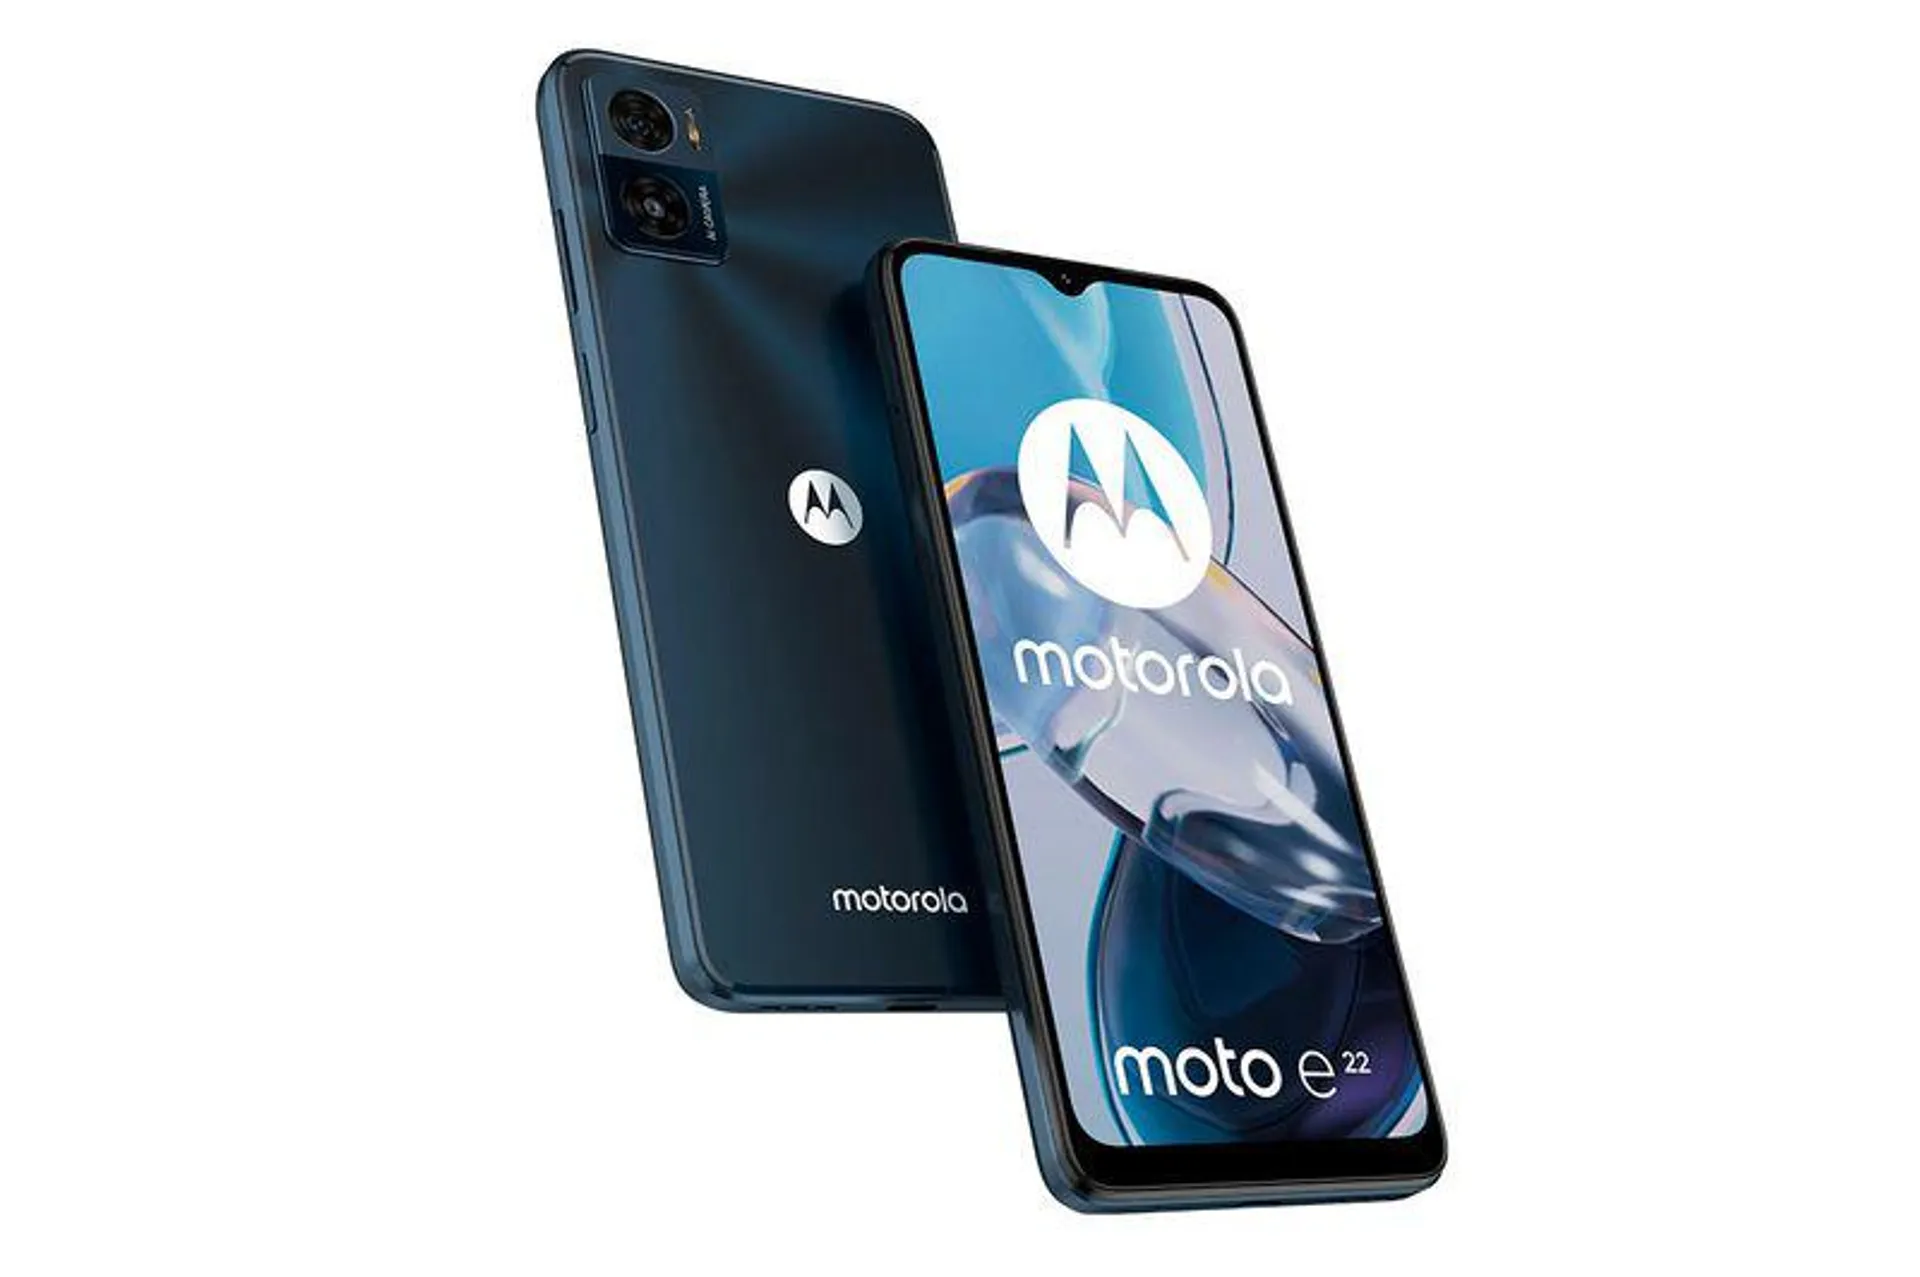 Celular Motorola Moto E22 64GB 16+2MP Negro